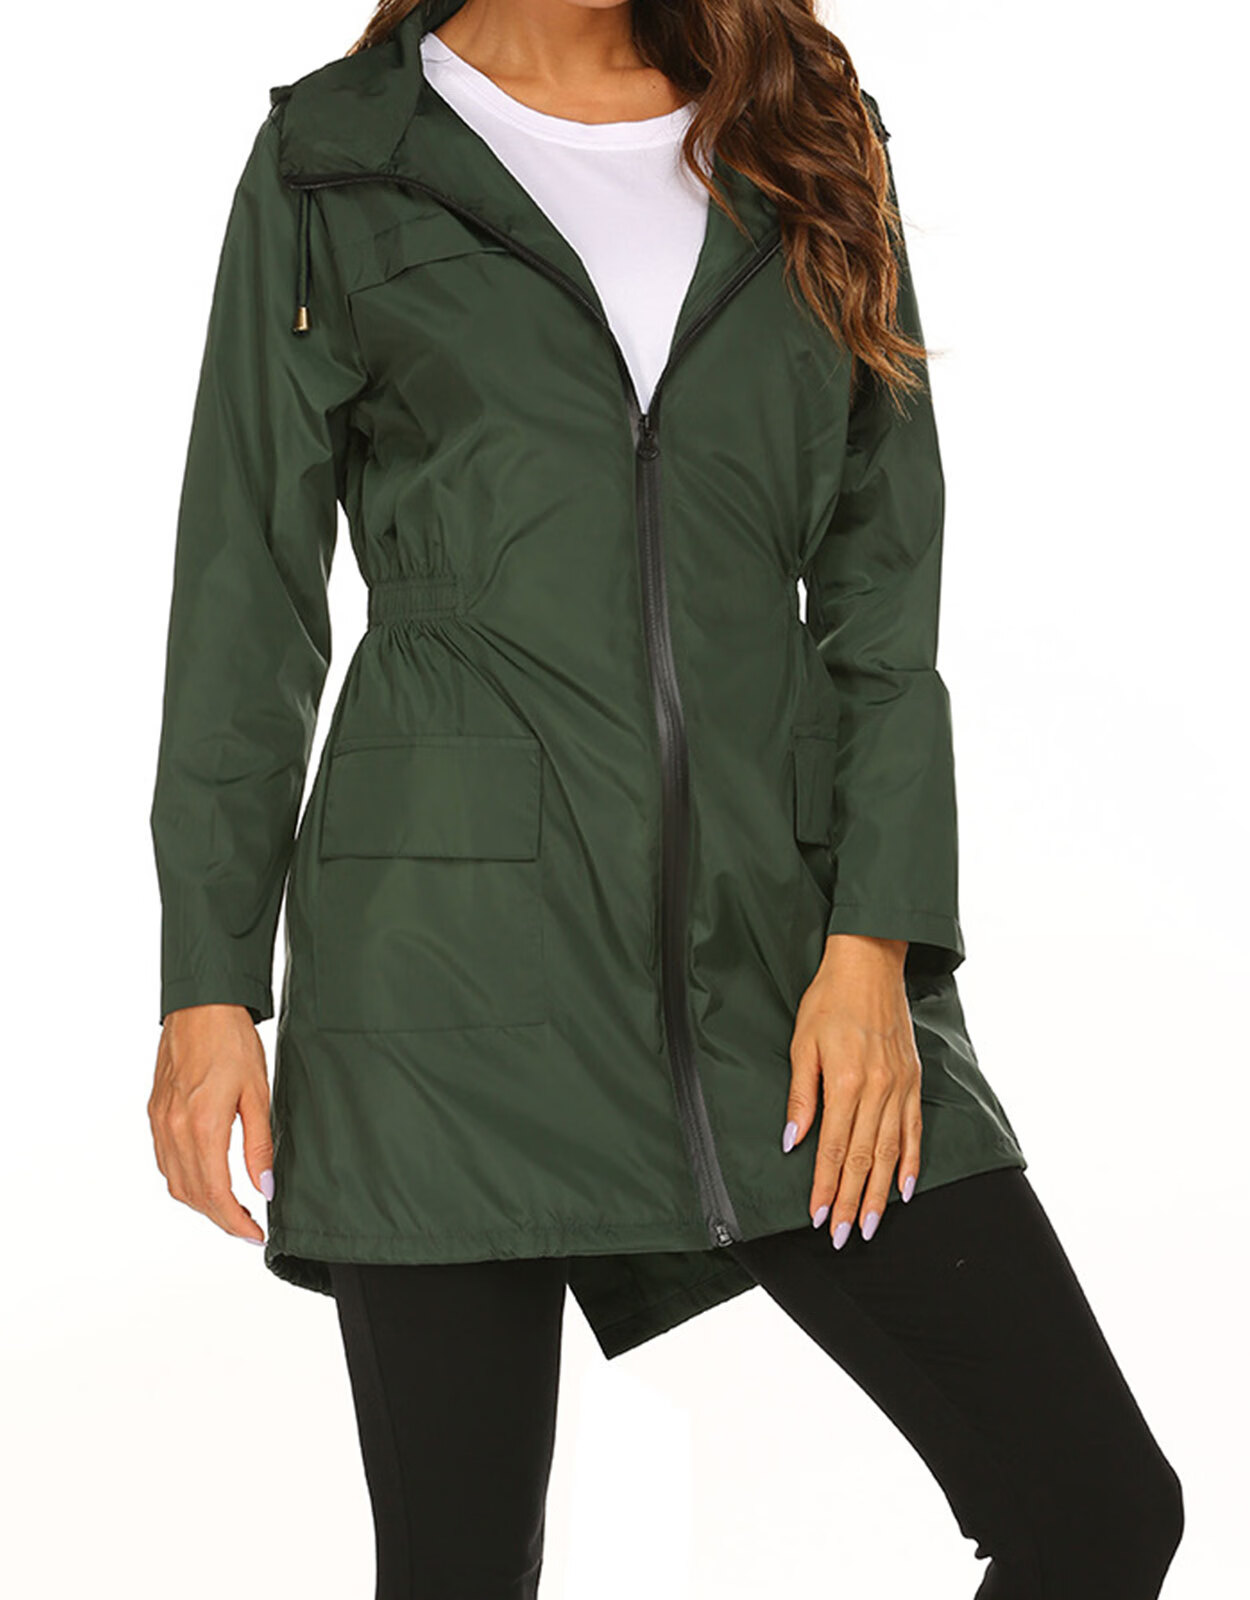 Rain Jackets for Women Waterproof Raincoats Lightweight Drawstrng Hooded Rain Jackets Windbreaker Outdoor Active Rainwear Jacket Alsol Lamesa - image 4 of 6